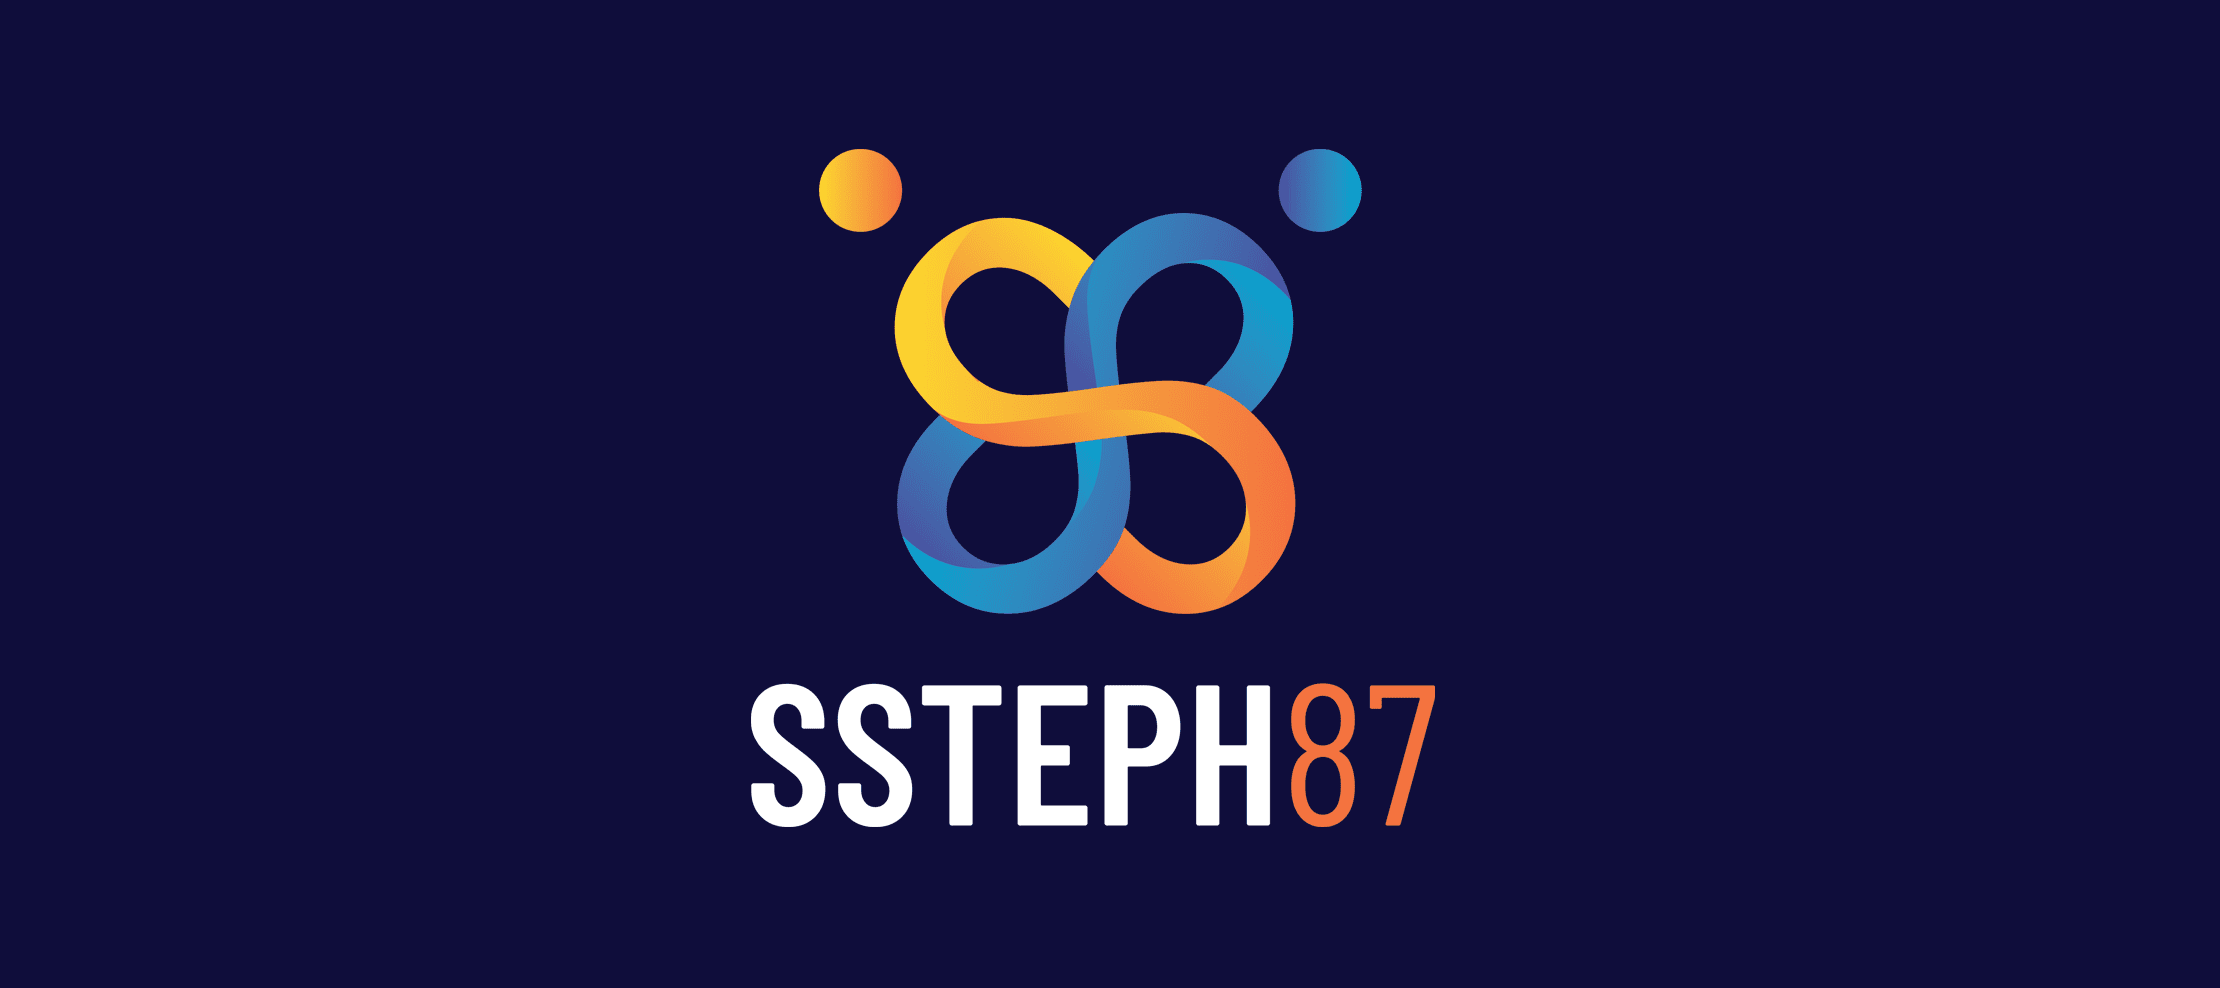 SSTEPH87 bandeau création graphitéine limoges